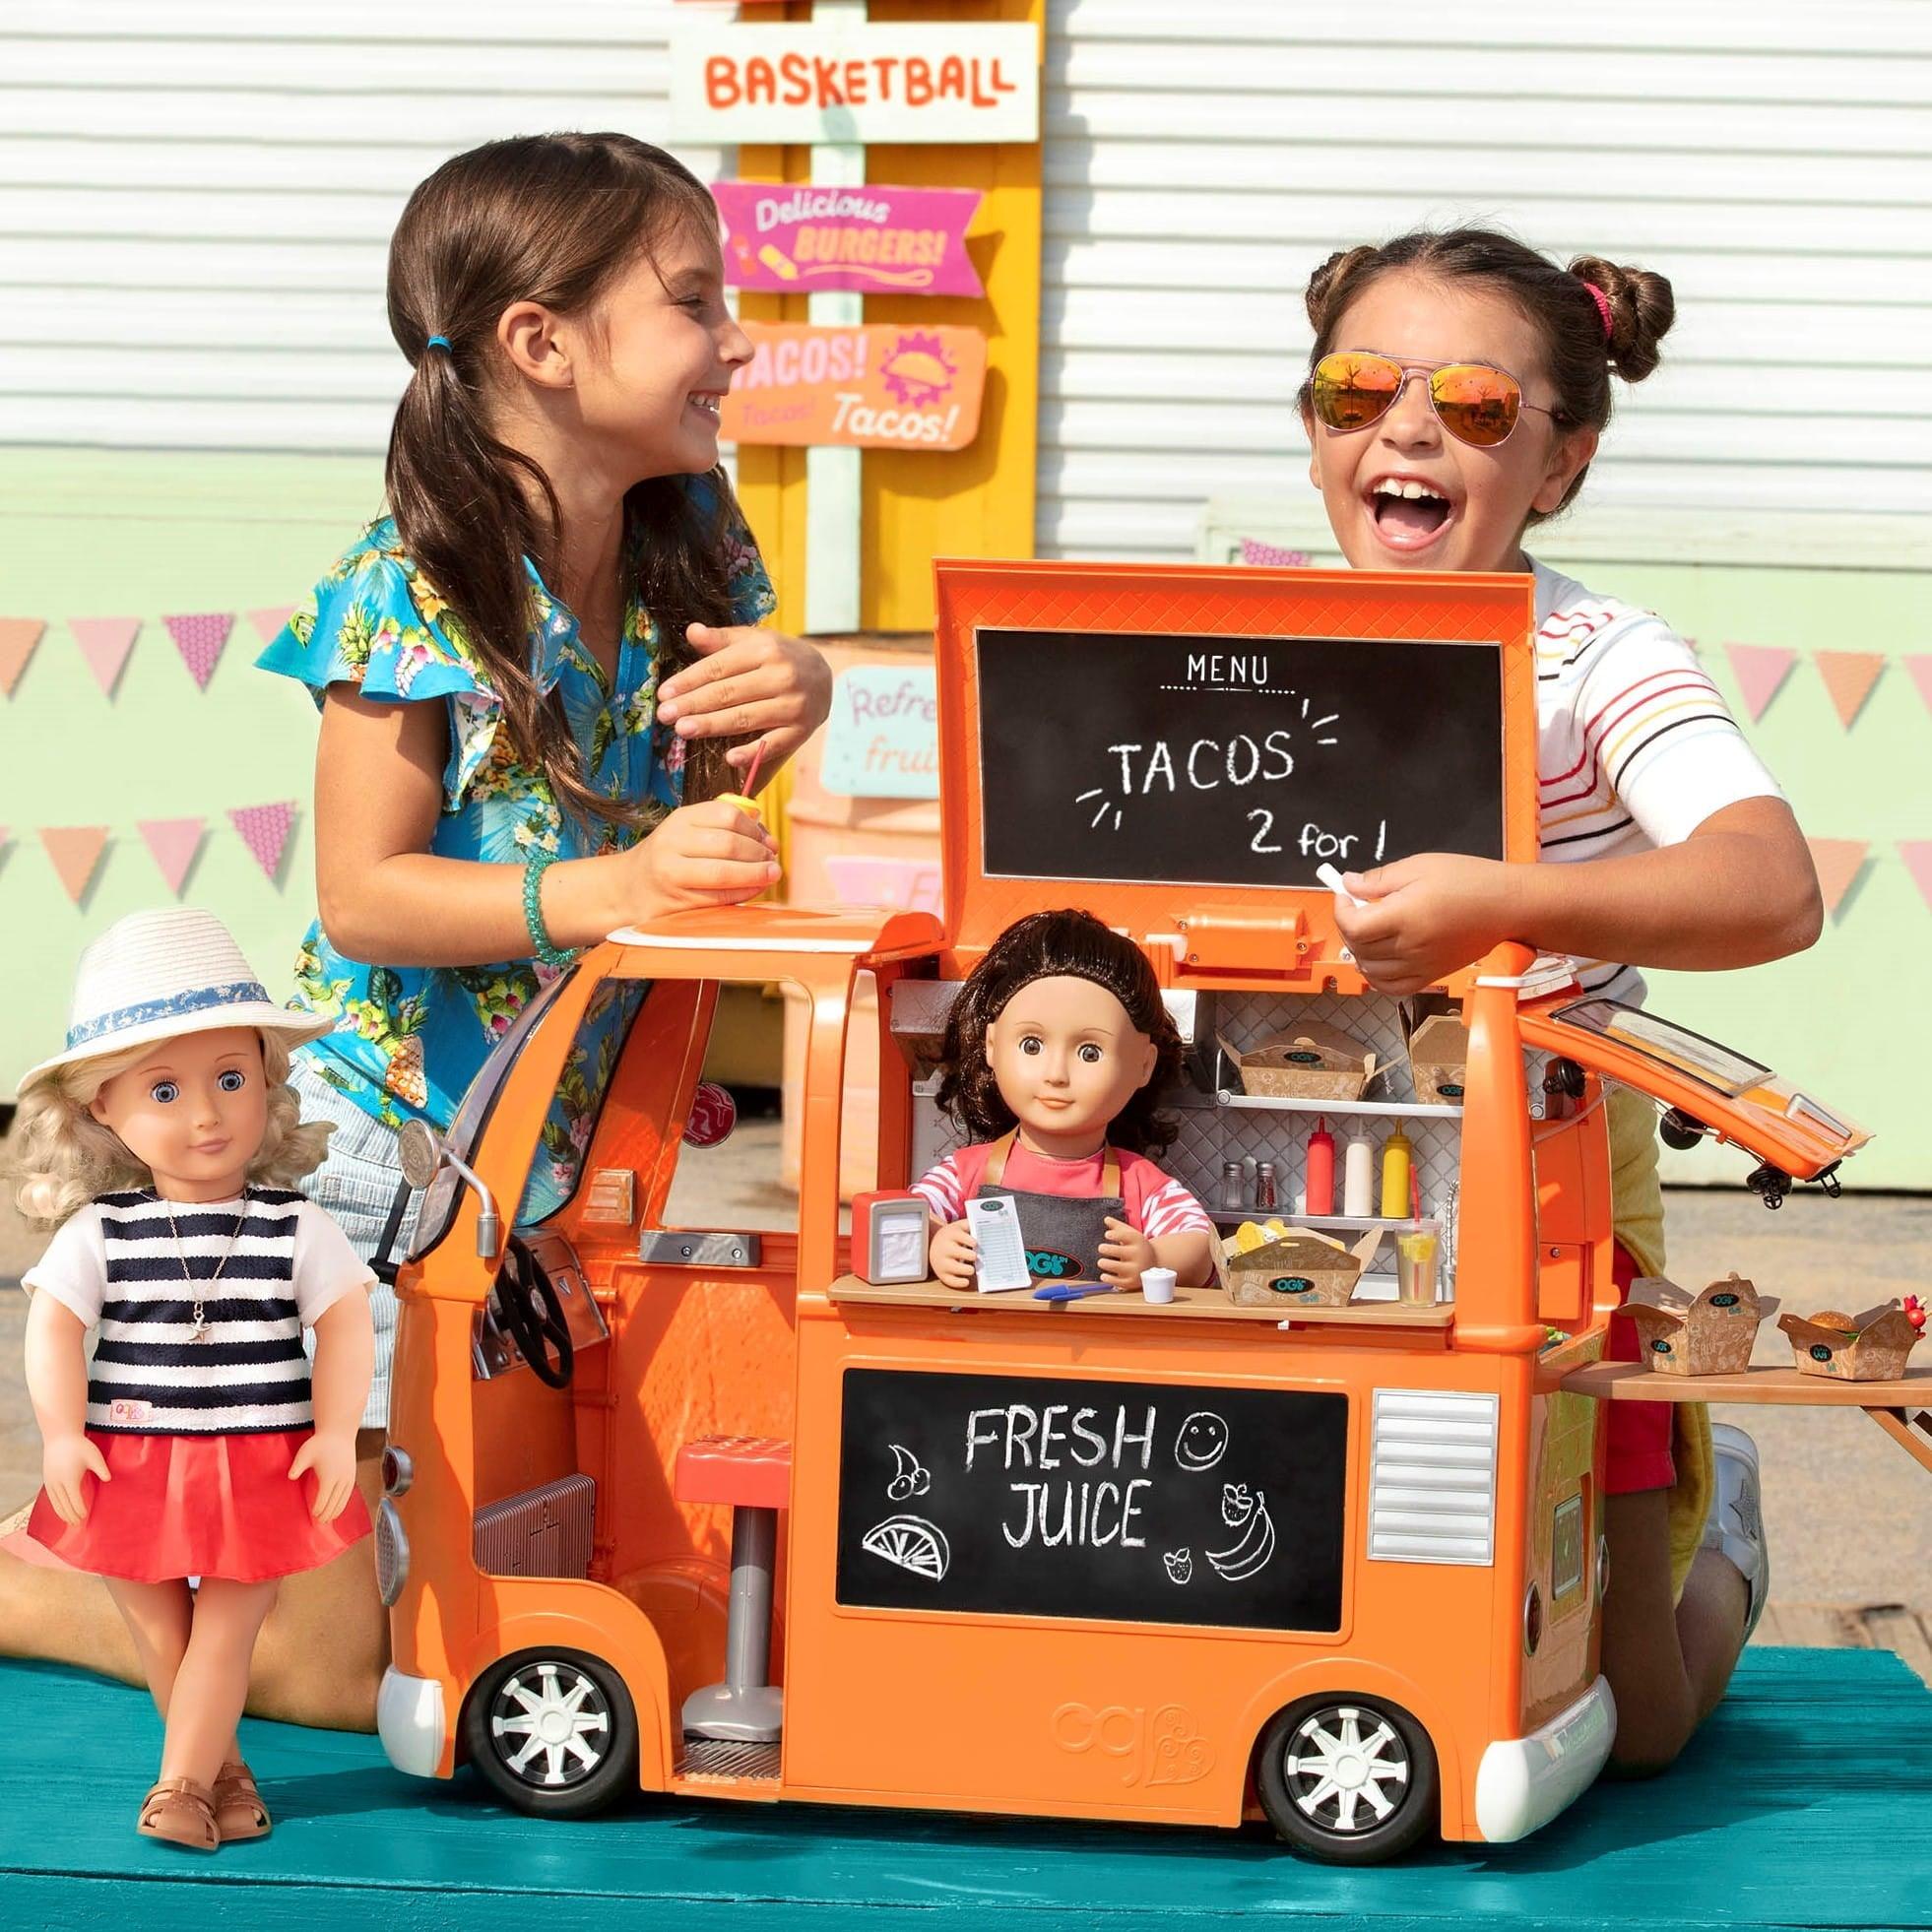 Our Generation: auto dla lalek Grill To Go Food Truck - Noski Noski